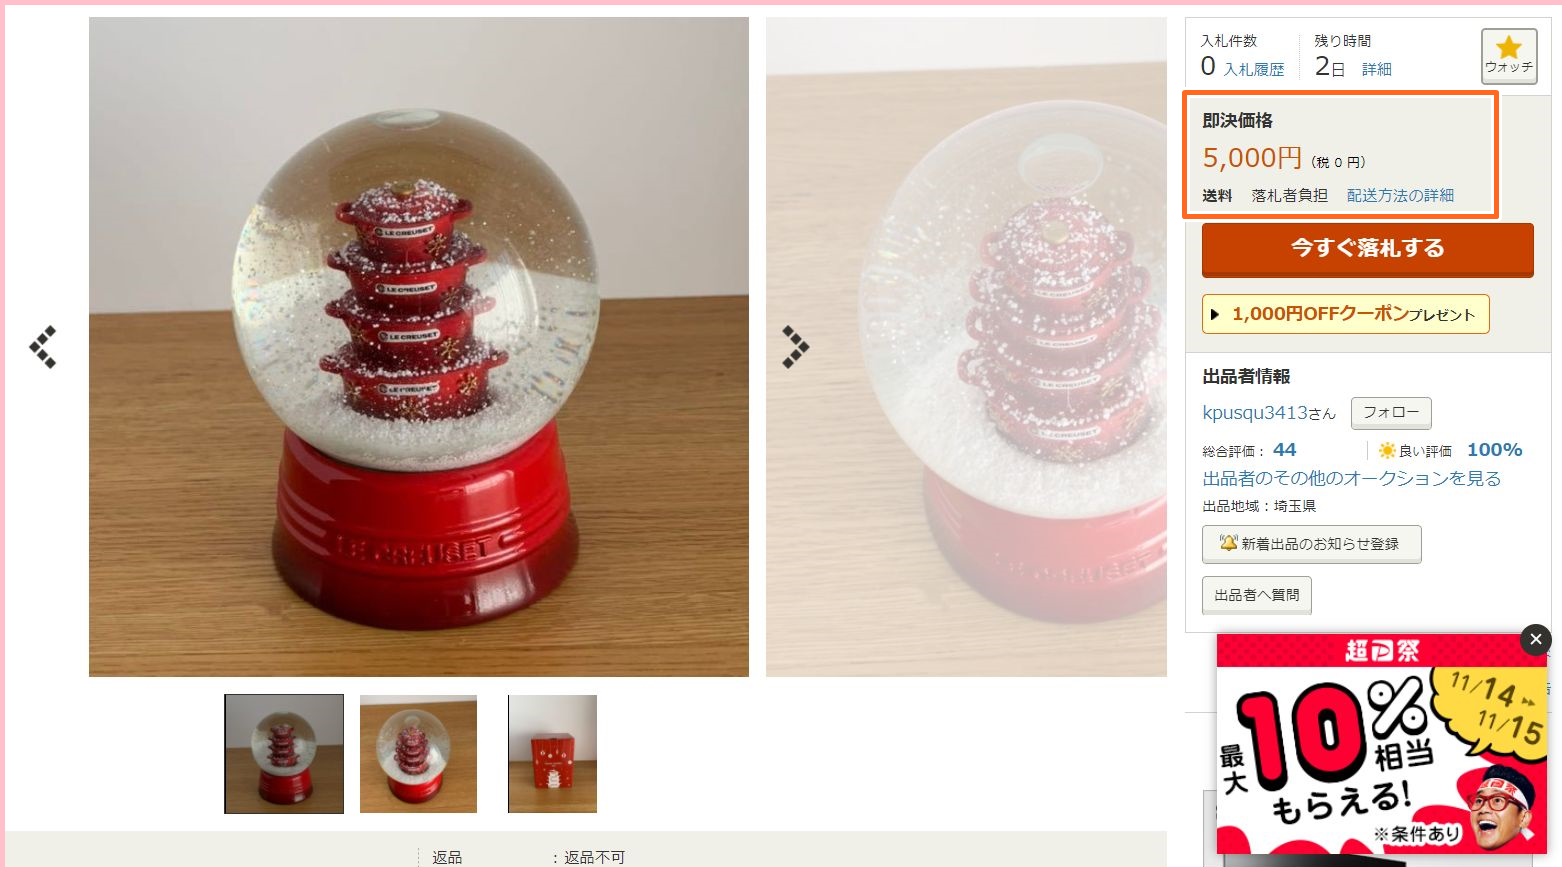 eBay輸出 クリスマスシーズン よく売れる人気商品 - れんとテッド